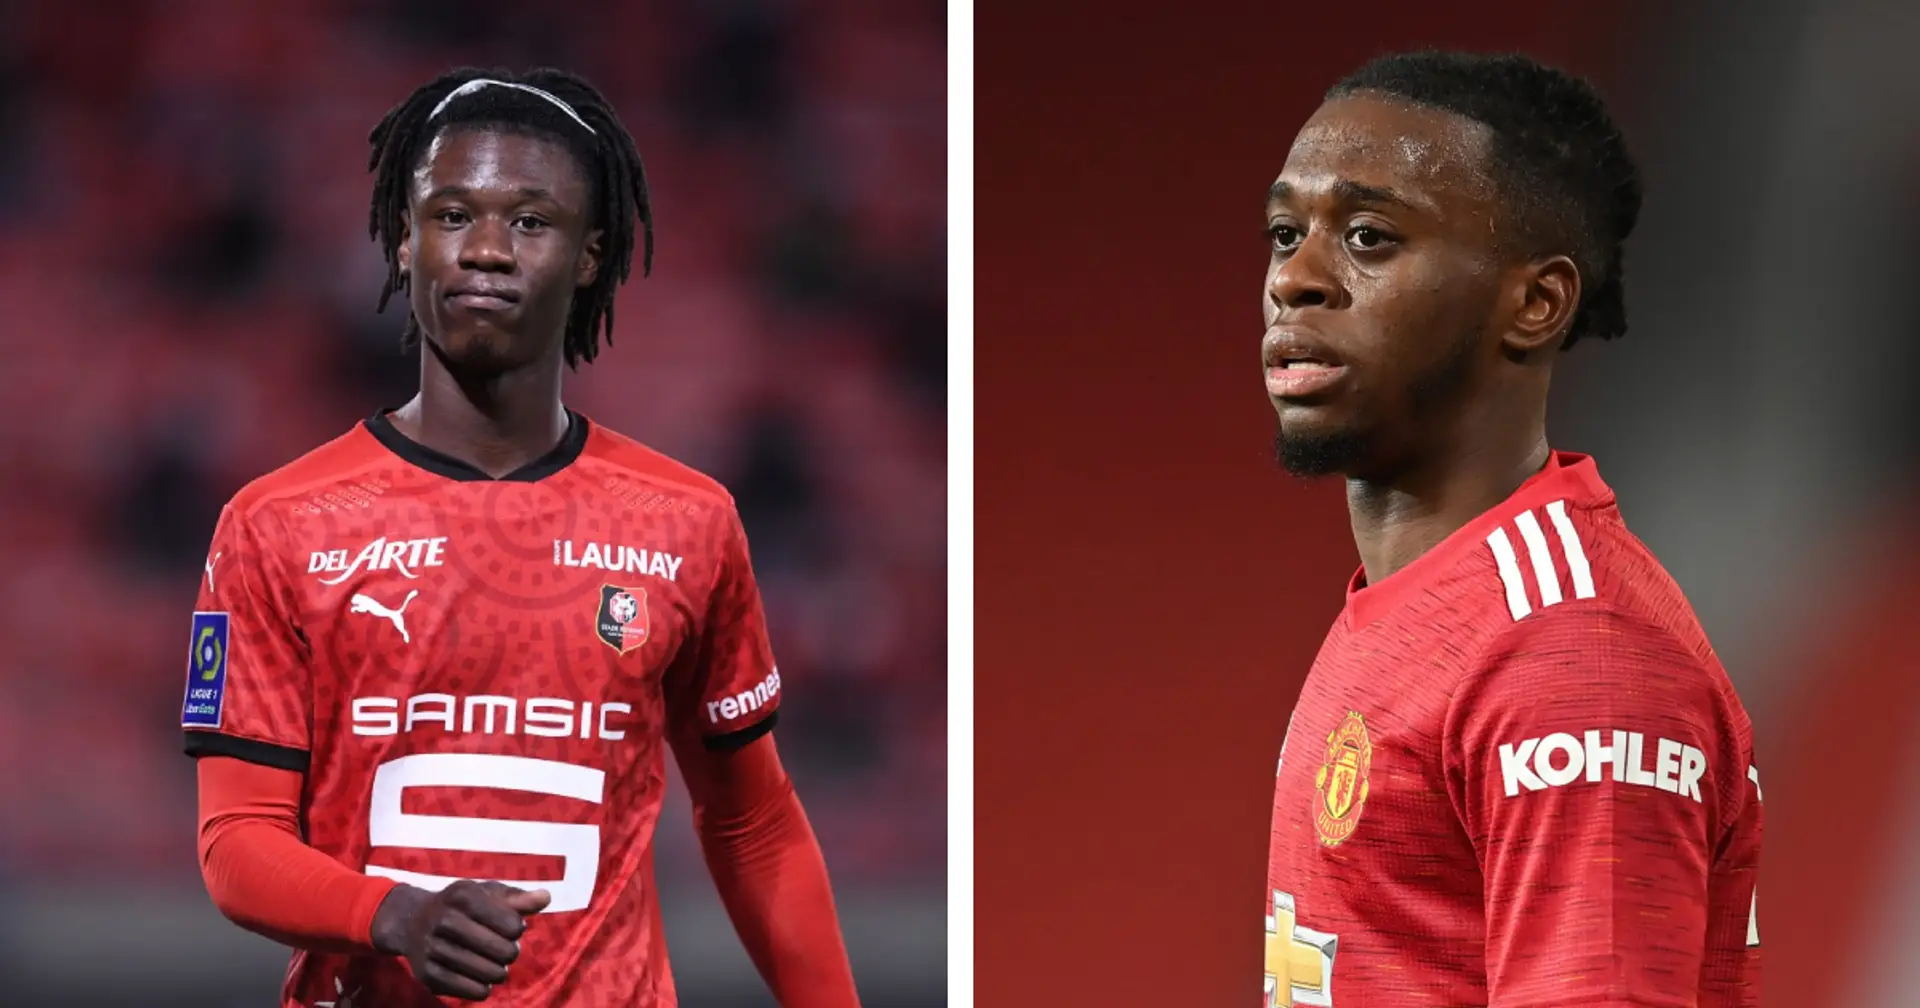 Here's why Camavinga and Wan-Bissaka could form an unstoppable partnership at Man United